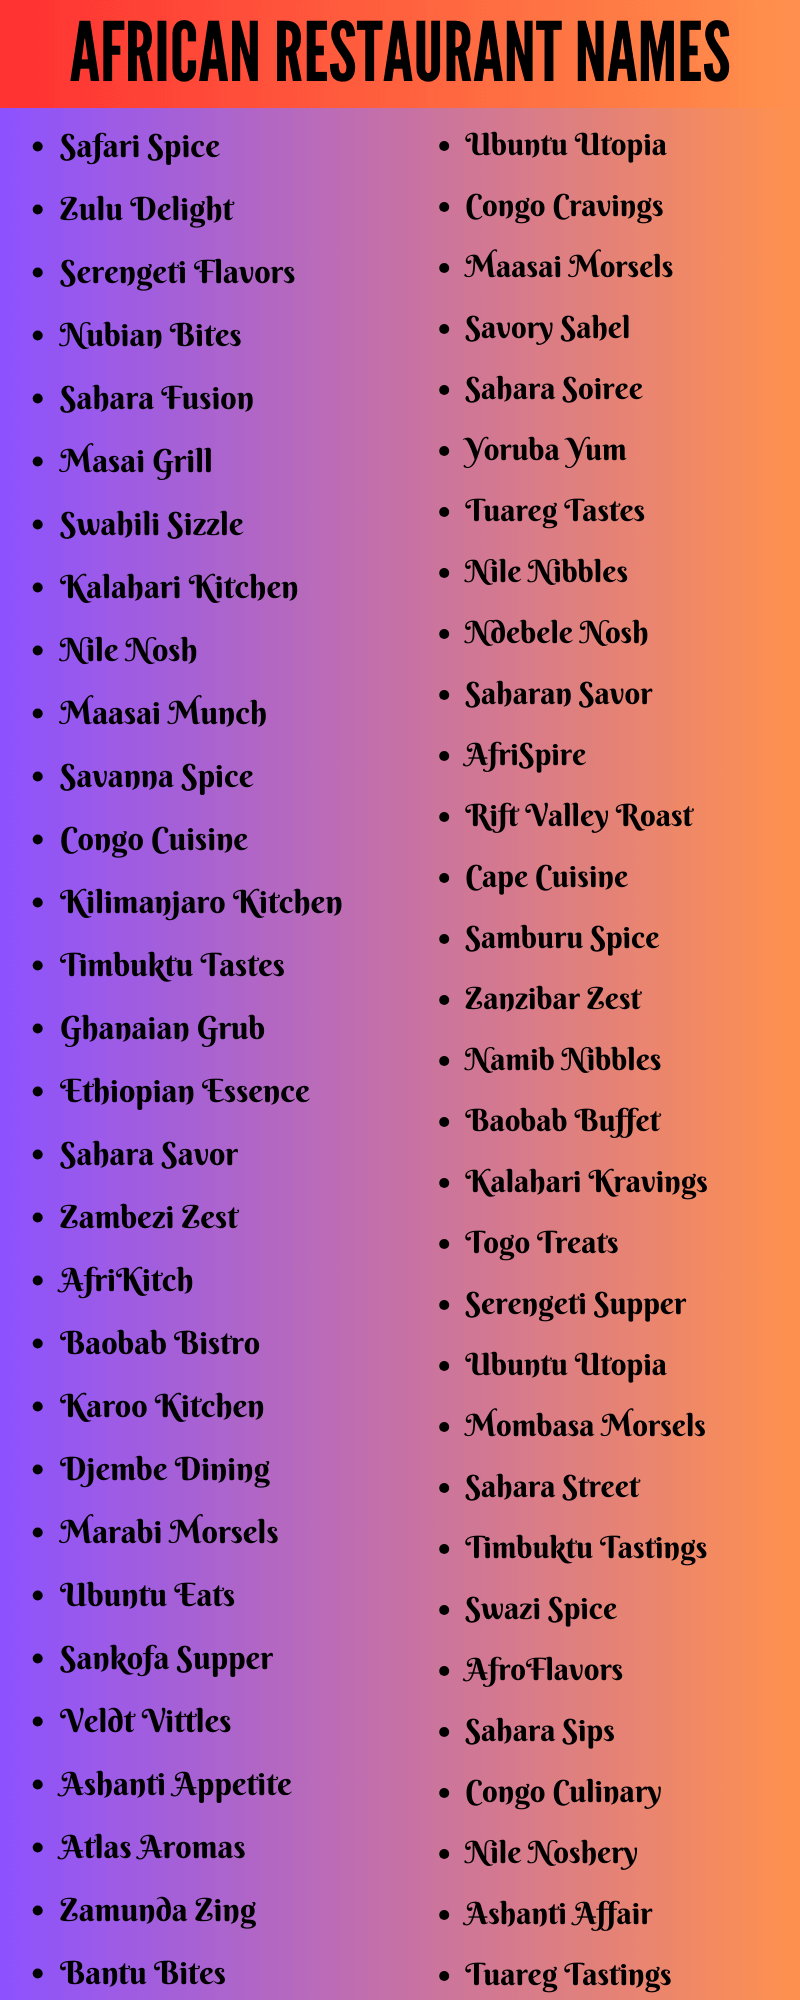 African Restaurant Names